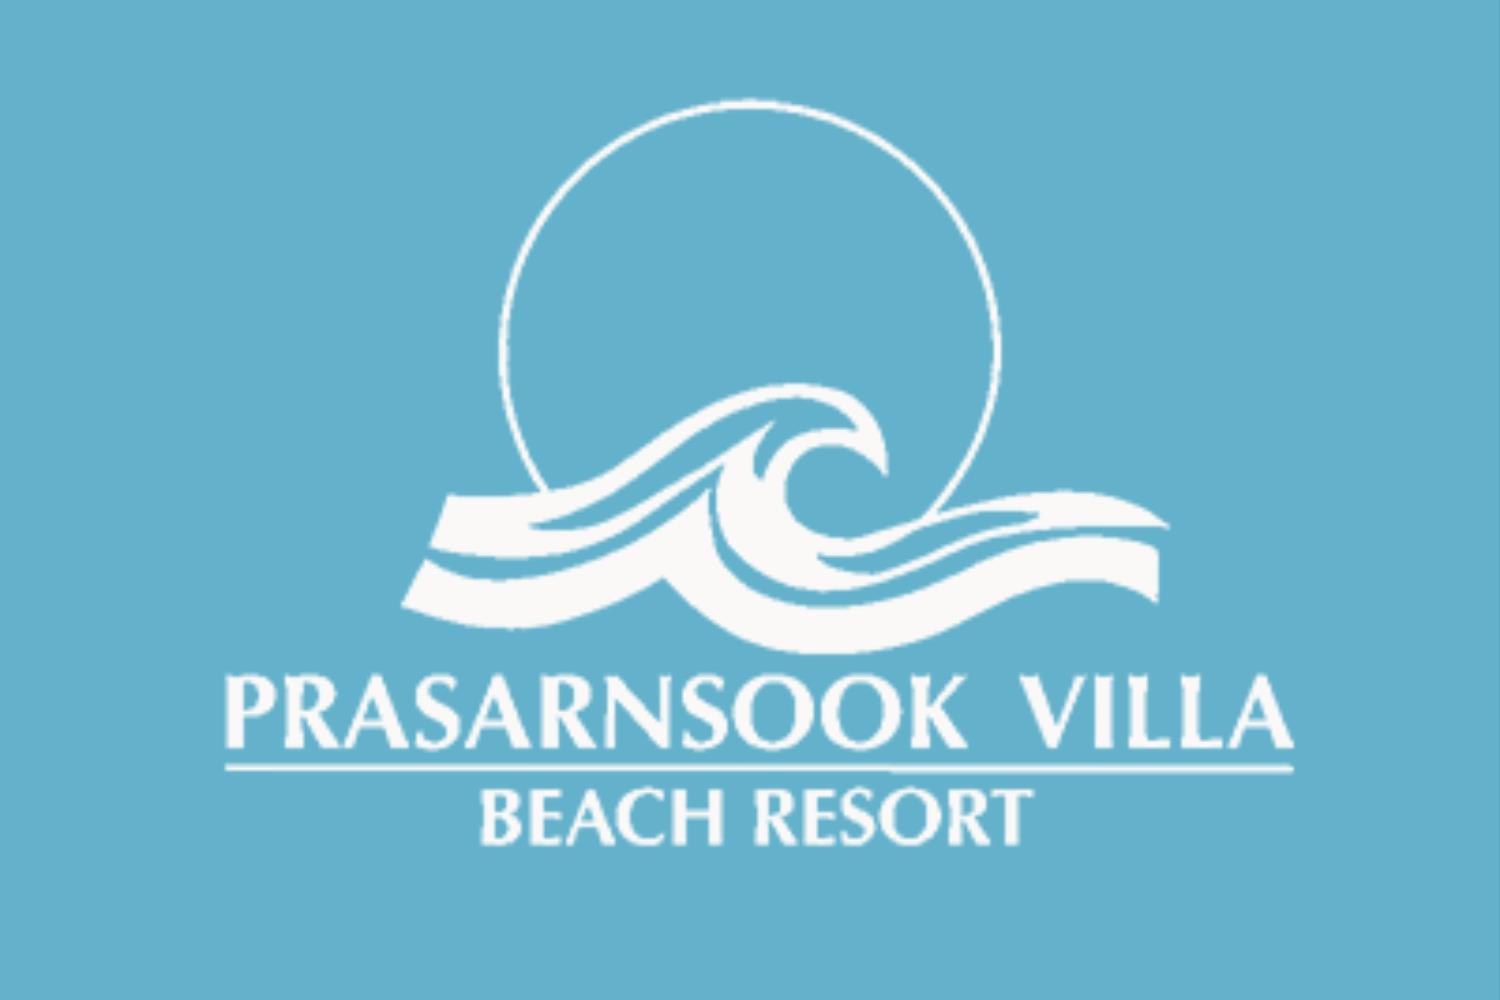 Prasarnsook Villa Beach Resort - ประสานสุข วิลล่า บีช รีสอร์ท